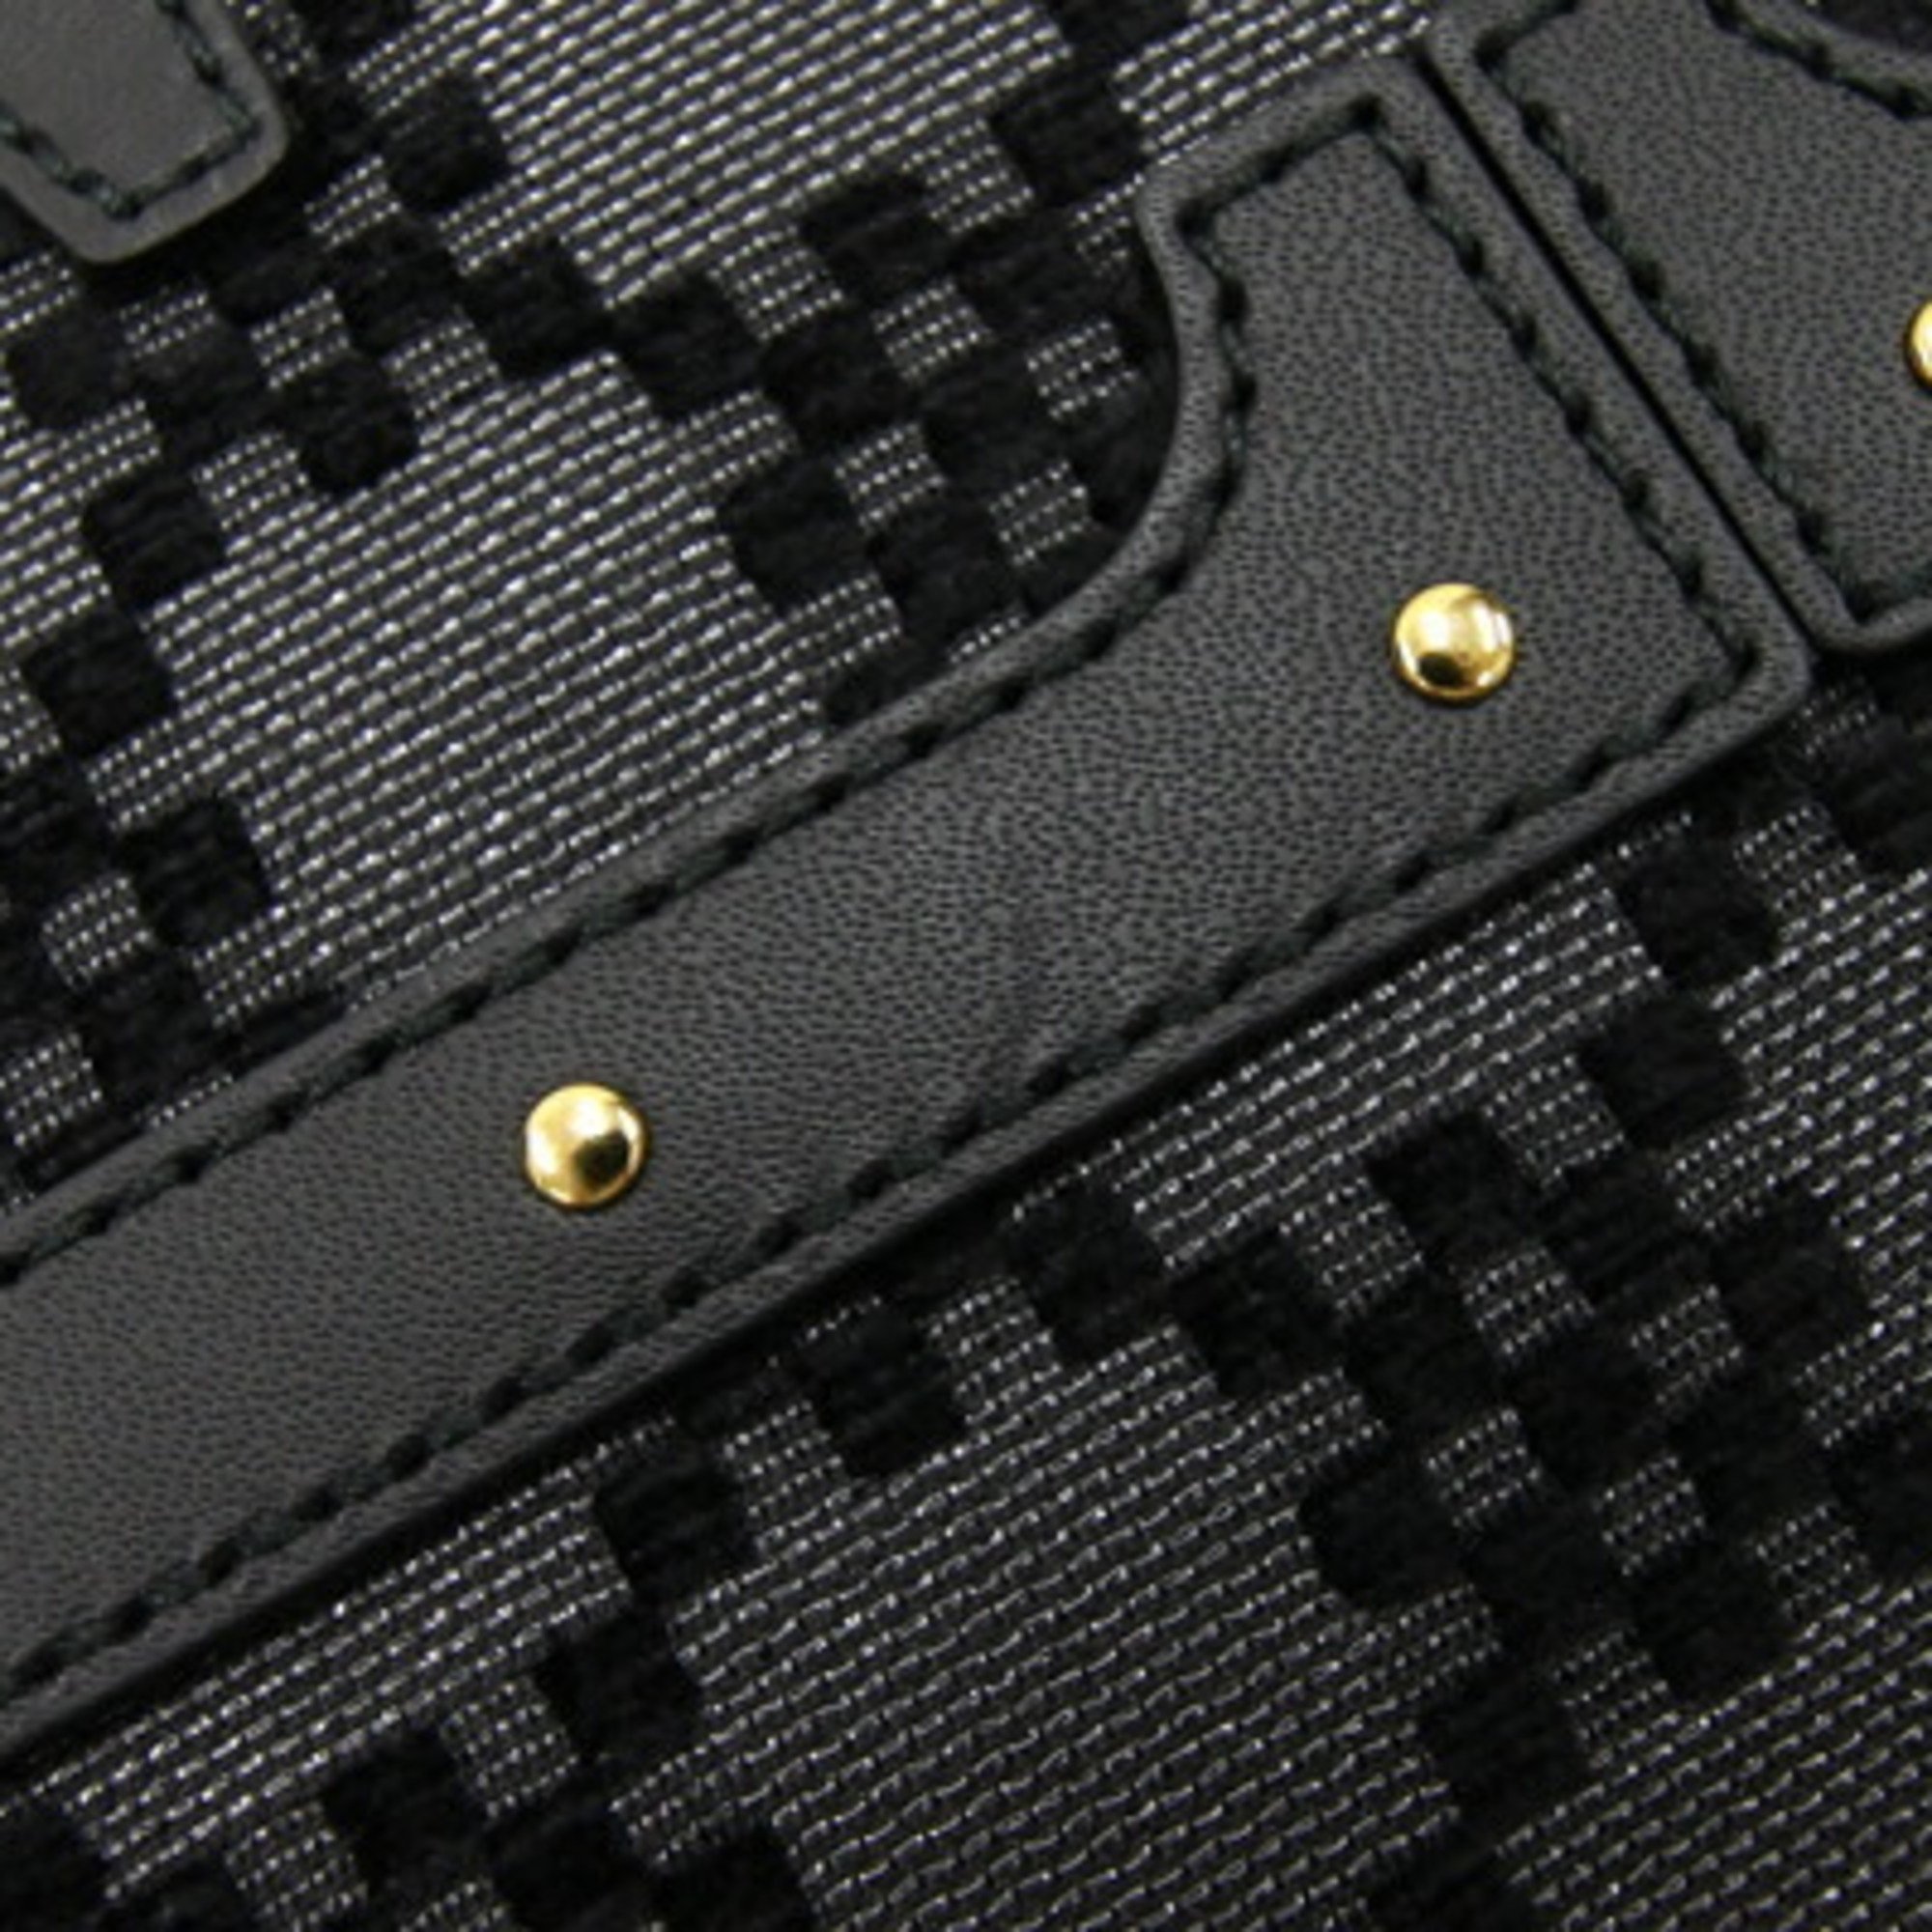 Furla Tote Bag Black Canvas Leather Ladies Strap FURLA?